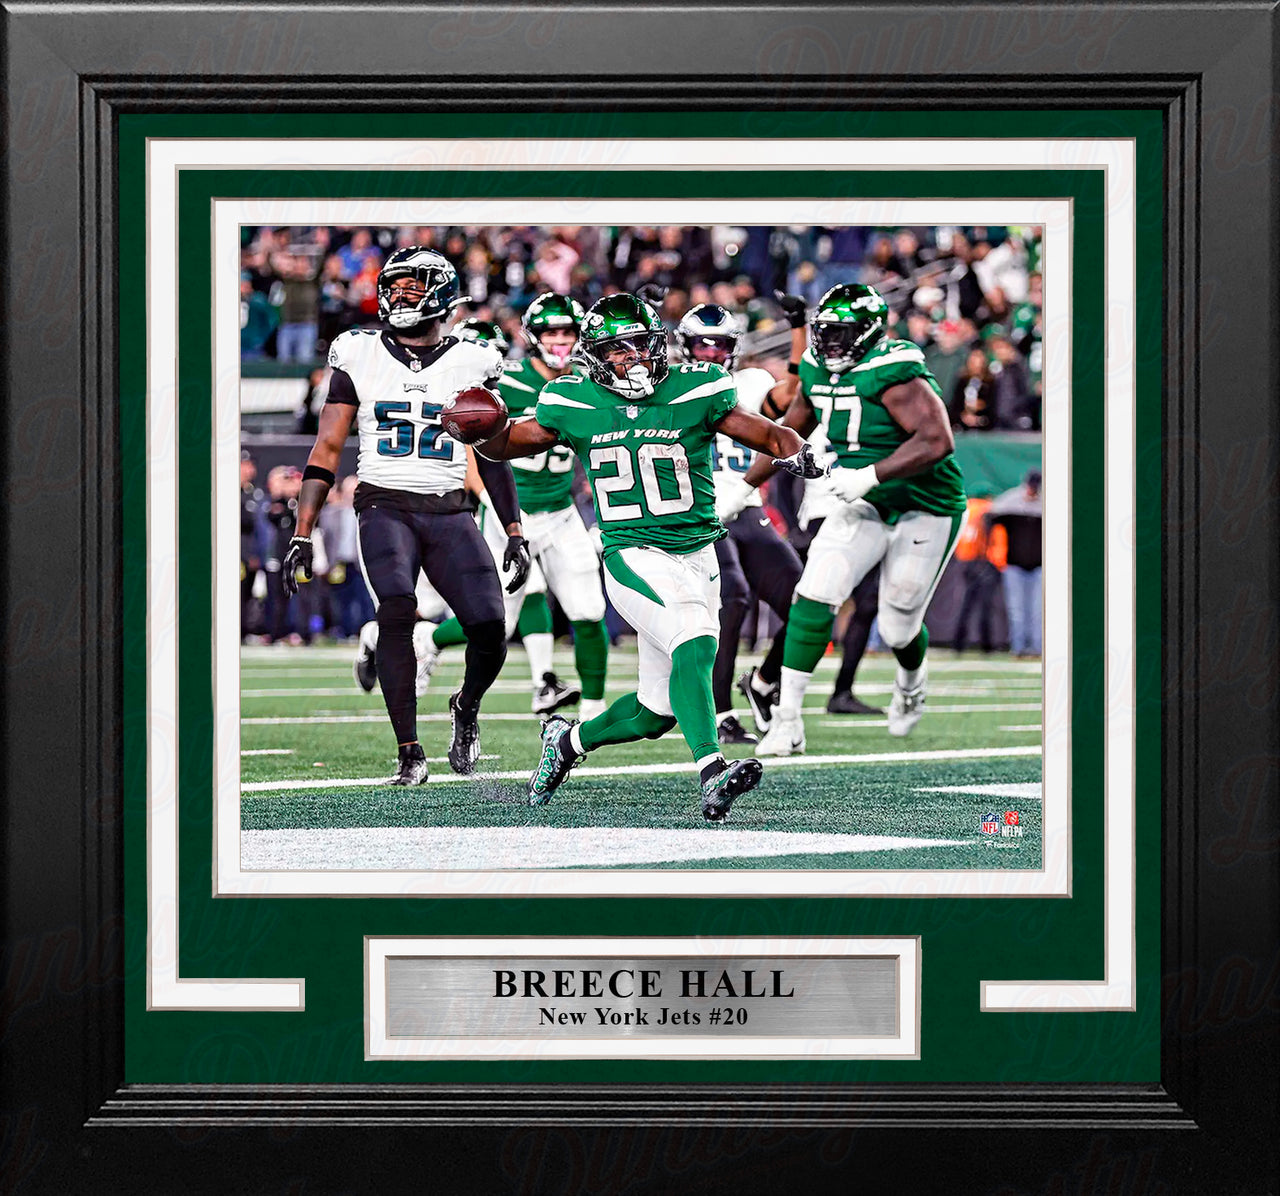 Breece Hall Touchdown Celebration New York Jets 8" x 10" Framed Football Photo